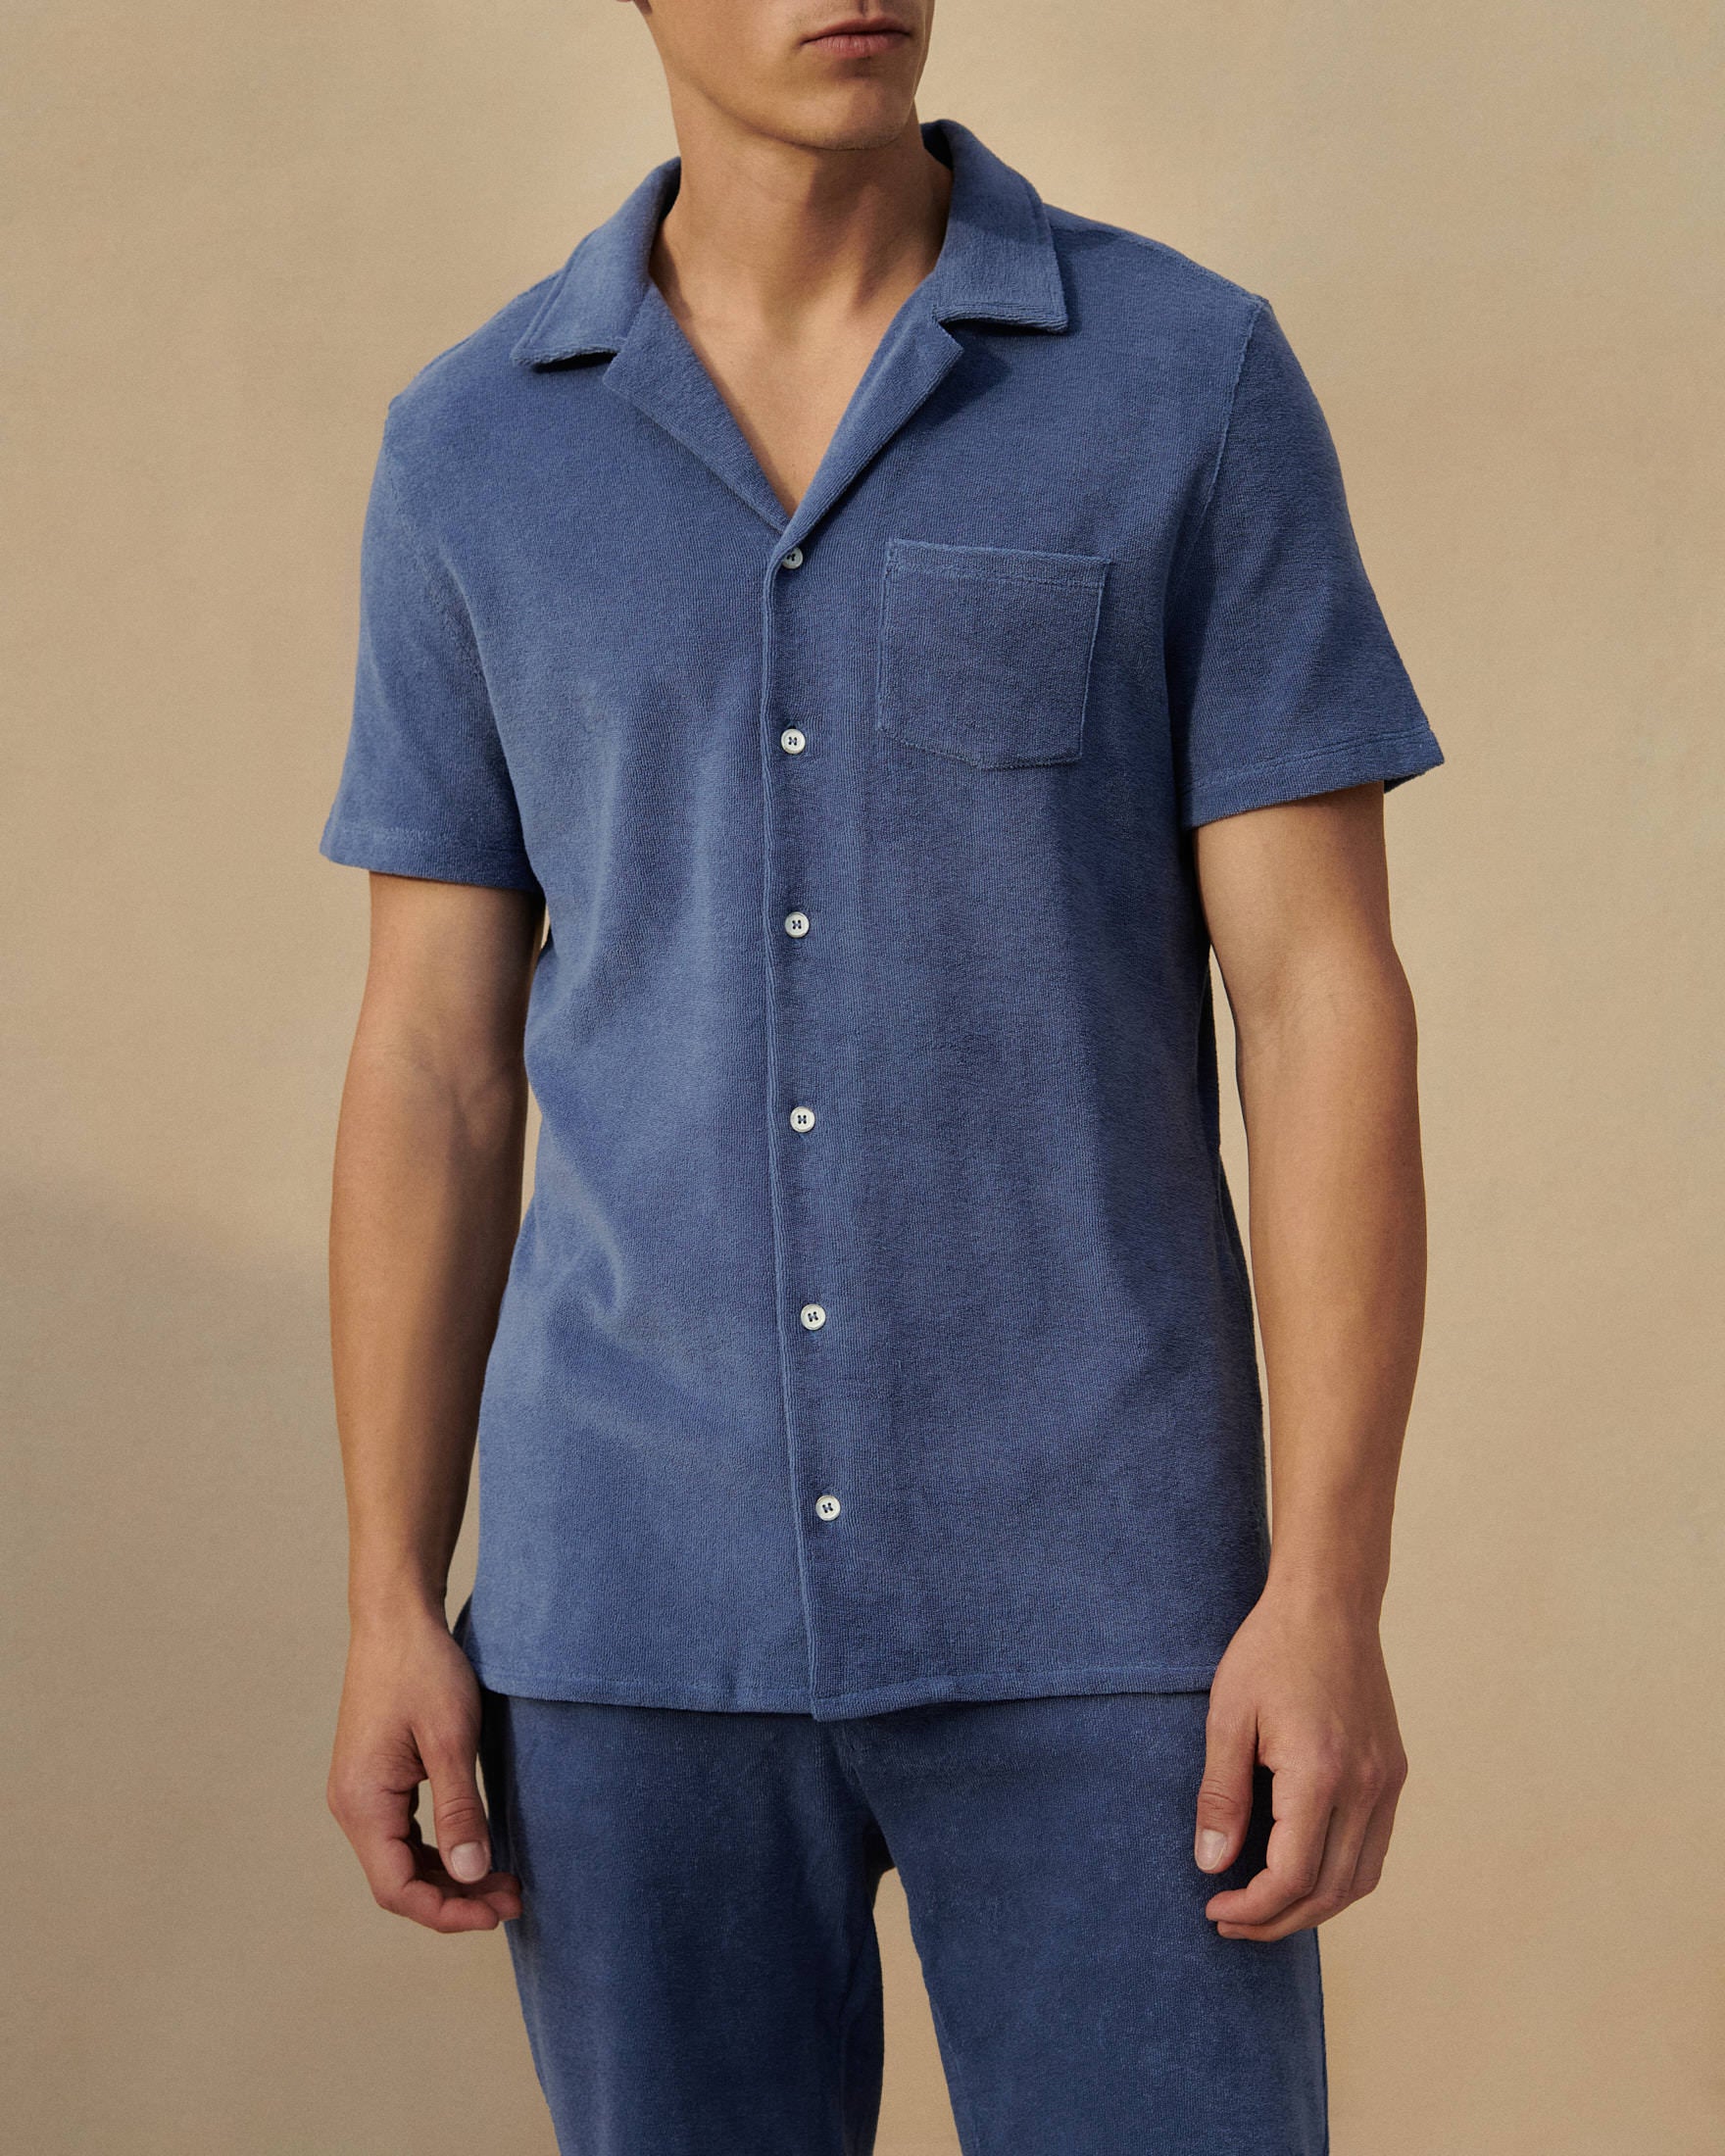 Organic Terry Cotton Luigi Shirt - Short Sleeves - Night Shadow Blue